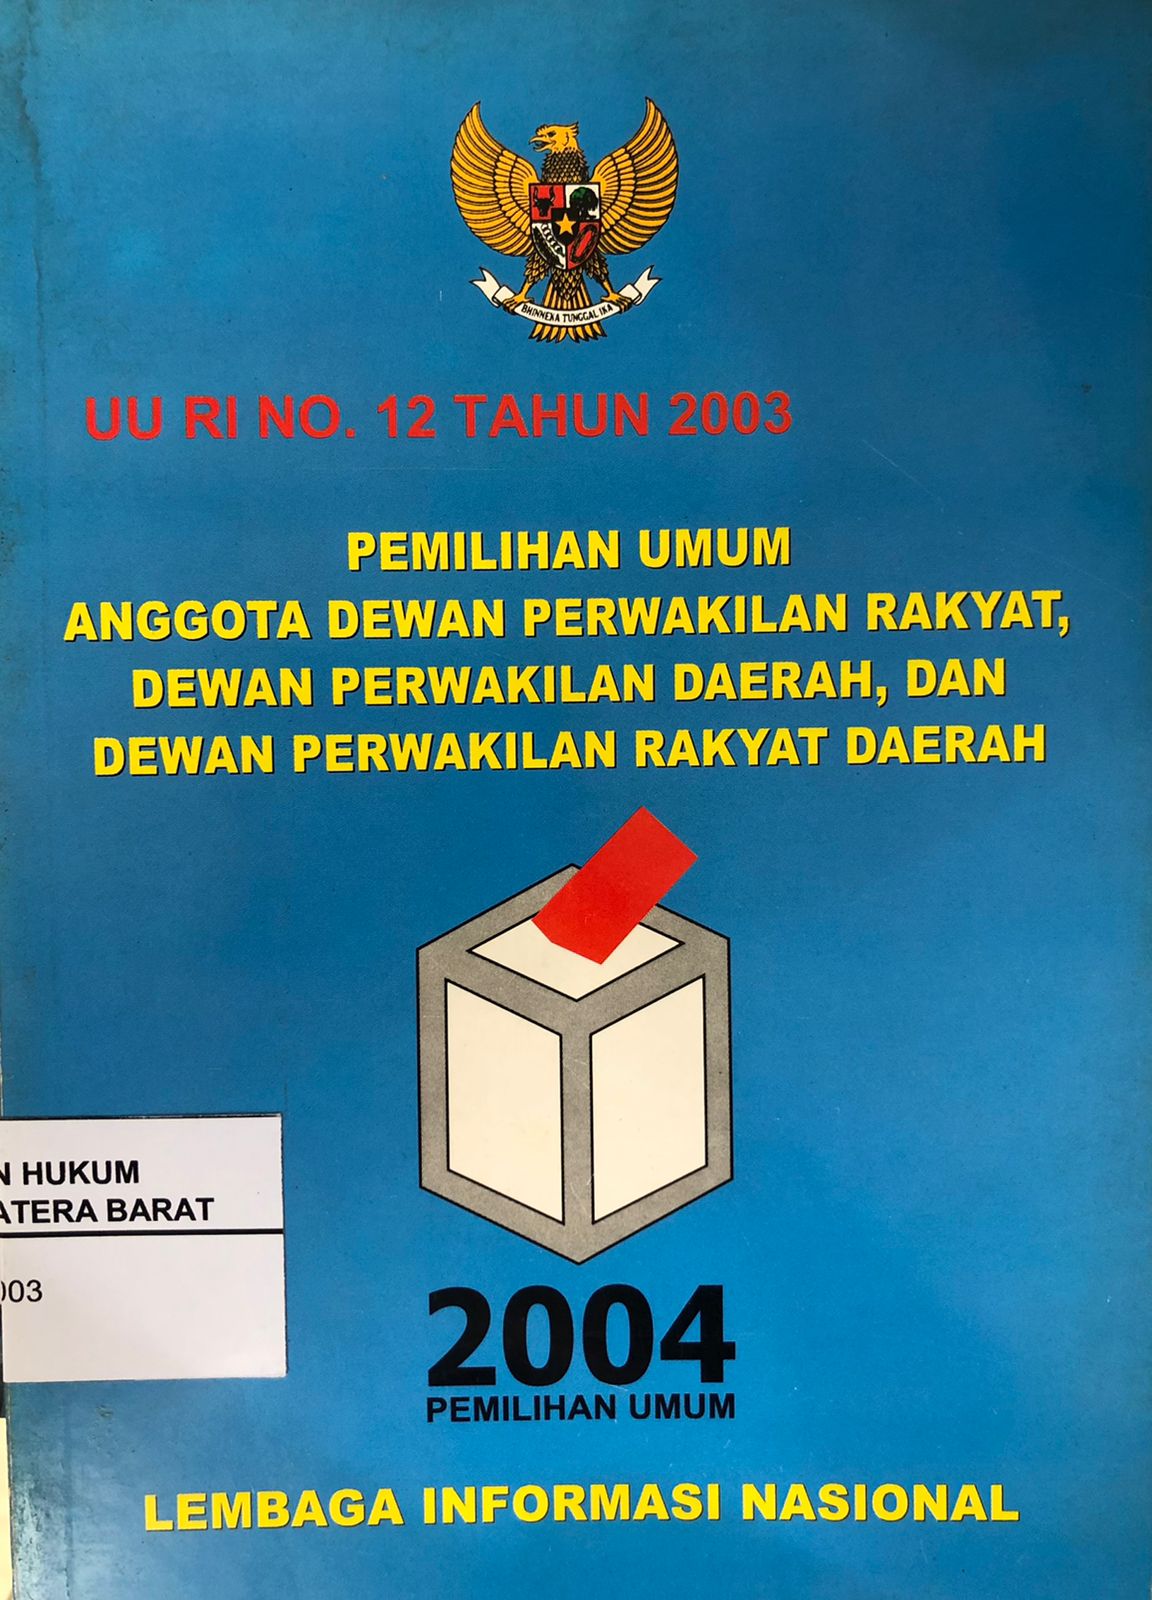 Undang-Undang Republik Indonesia No. 12 Tahun 2003 Tentang Pemilihan Umum Anggota DPR, DPD dan DPRD